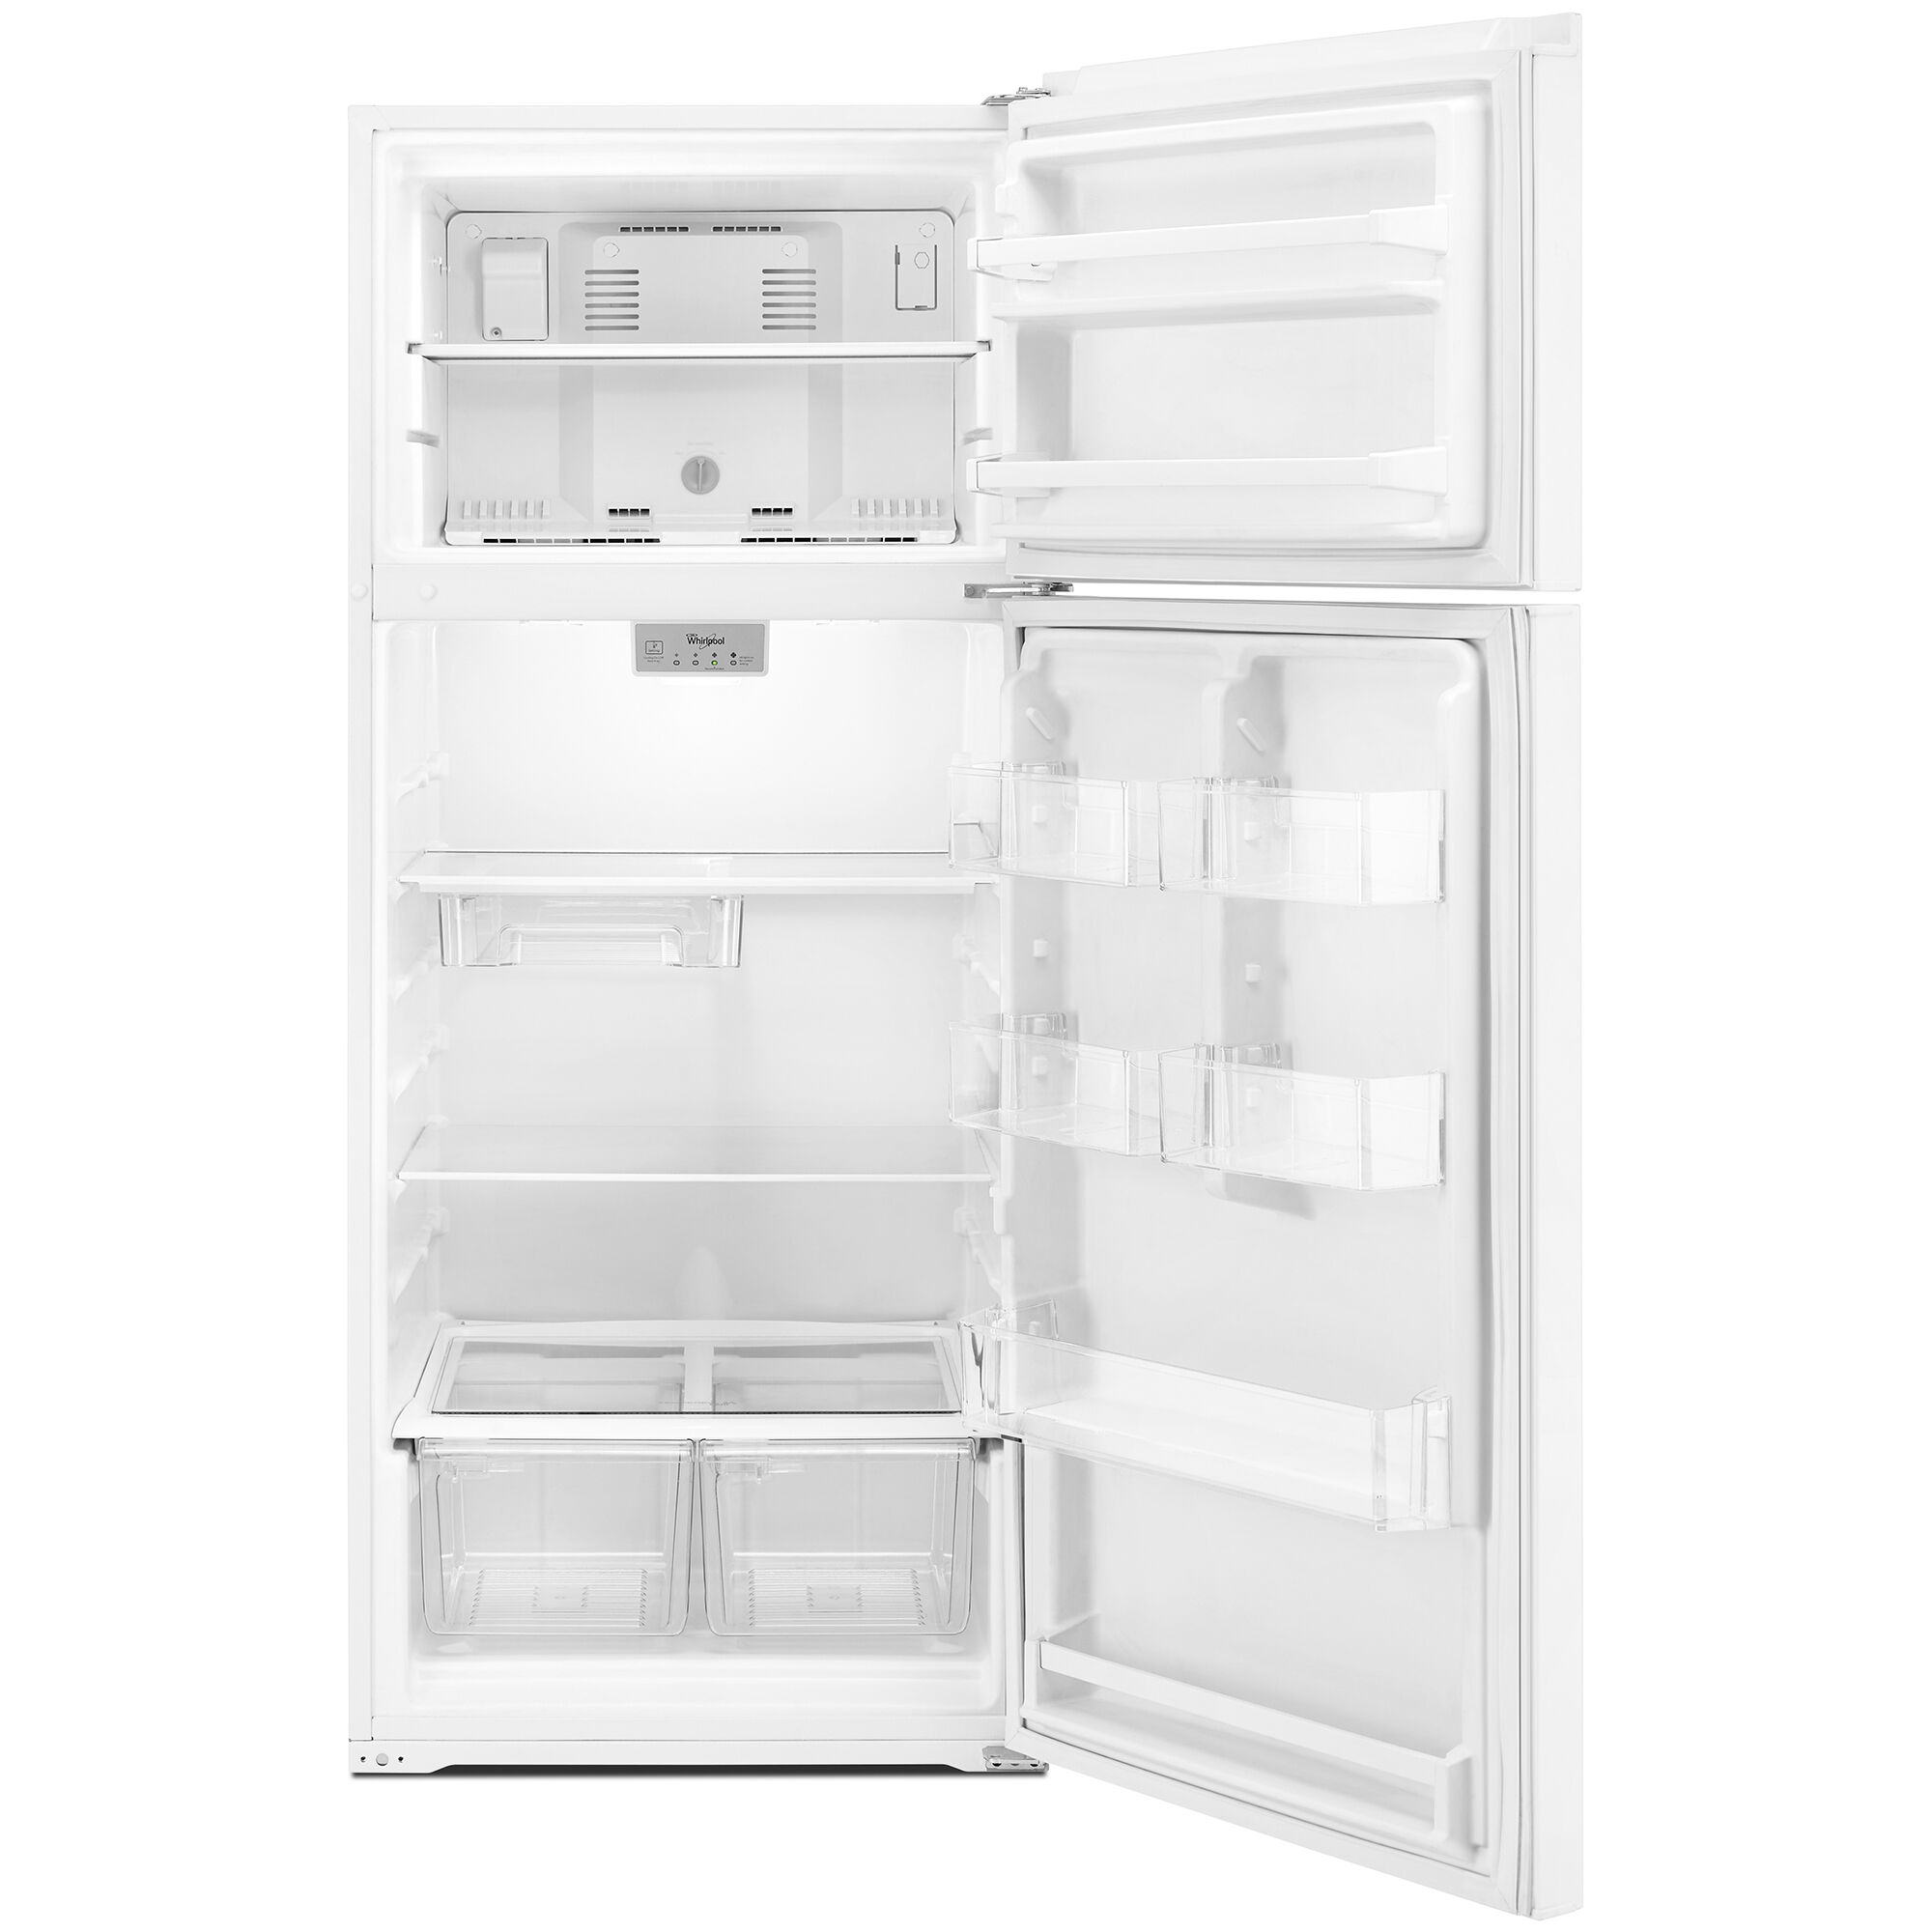 Whirlpool 28 in. 18.0 cu. ft. Top Freezer Refrigerator - White 